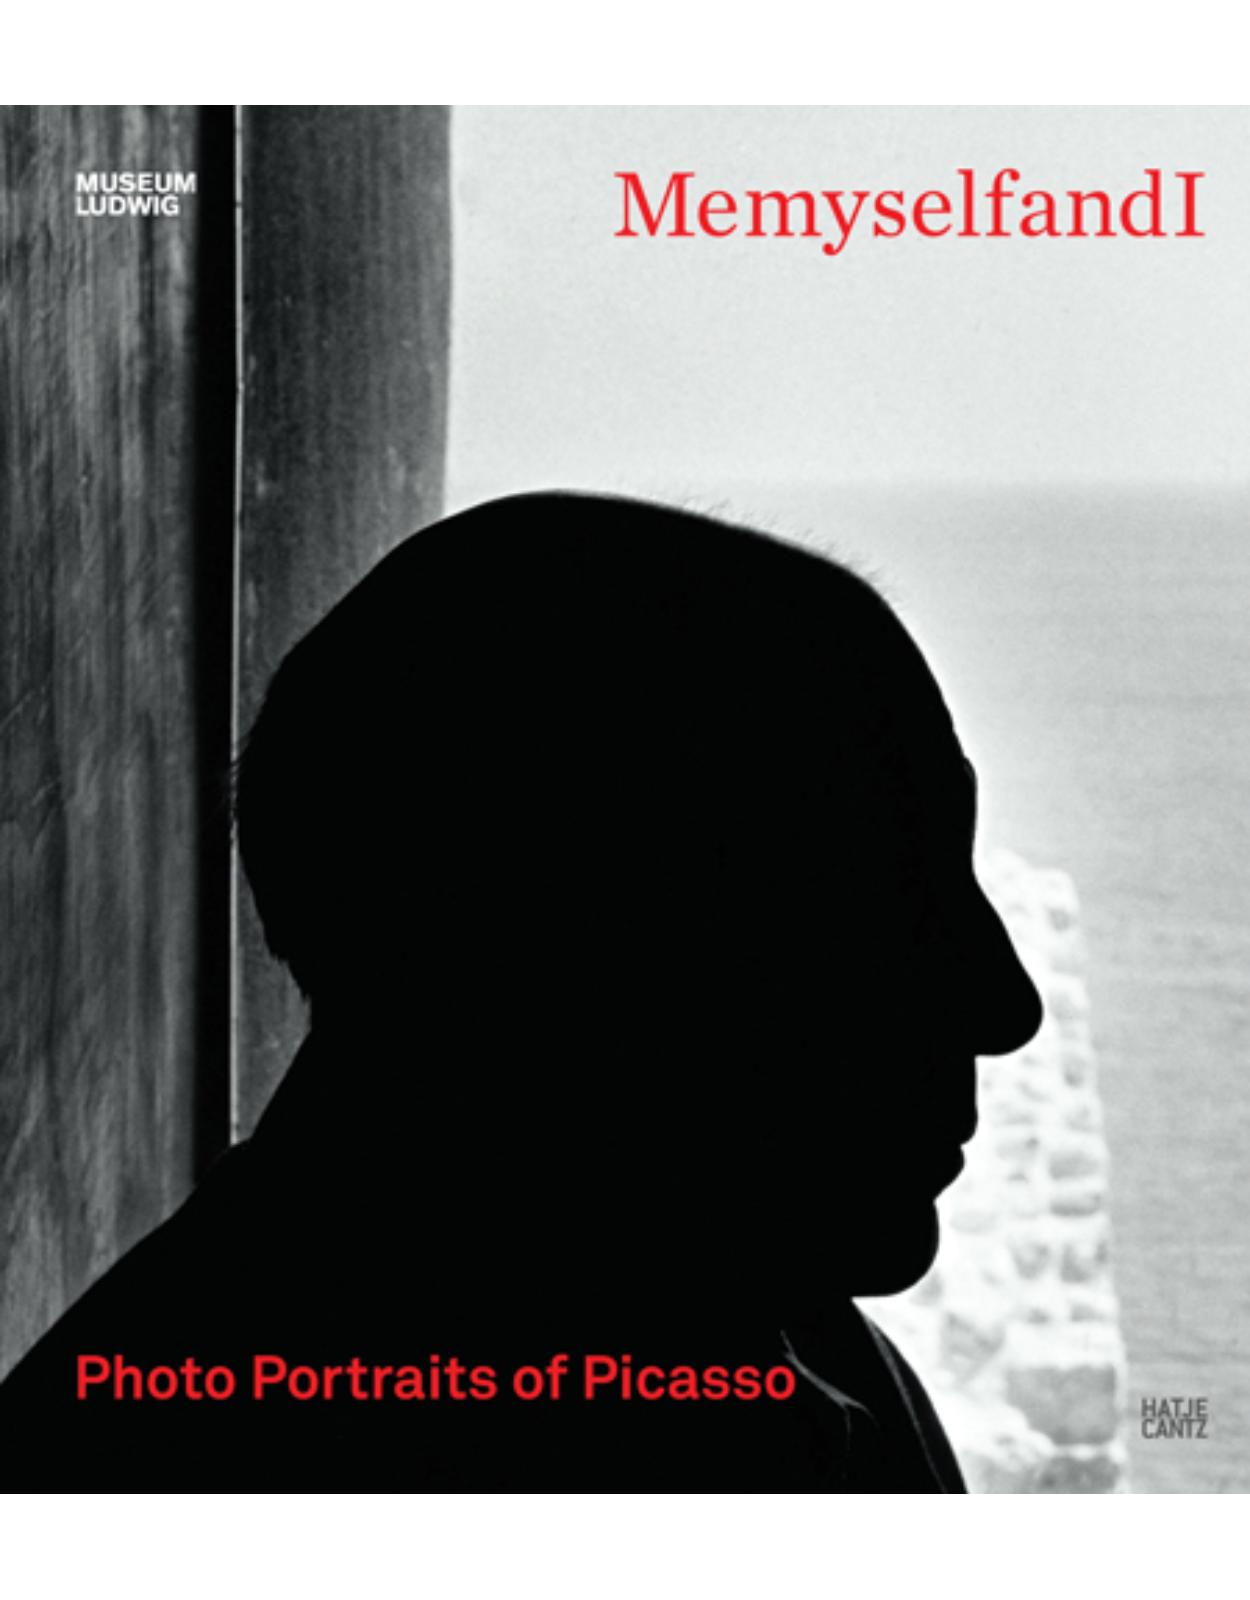 Photo Portraits of Picasso:MeMyselfandI